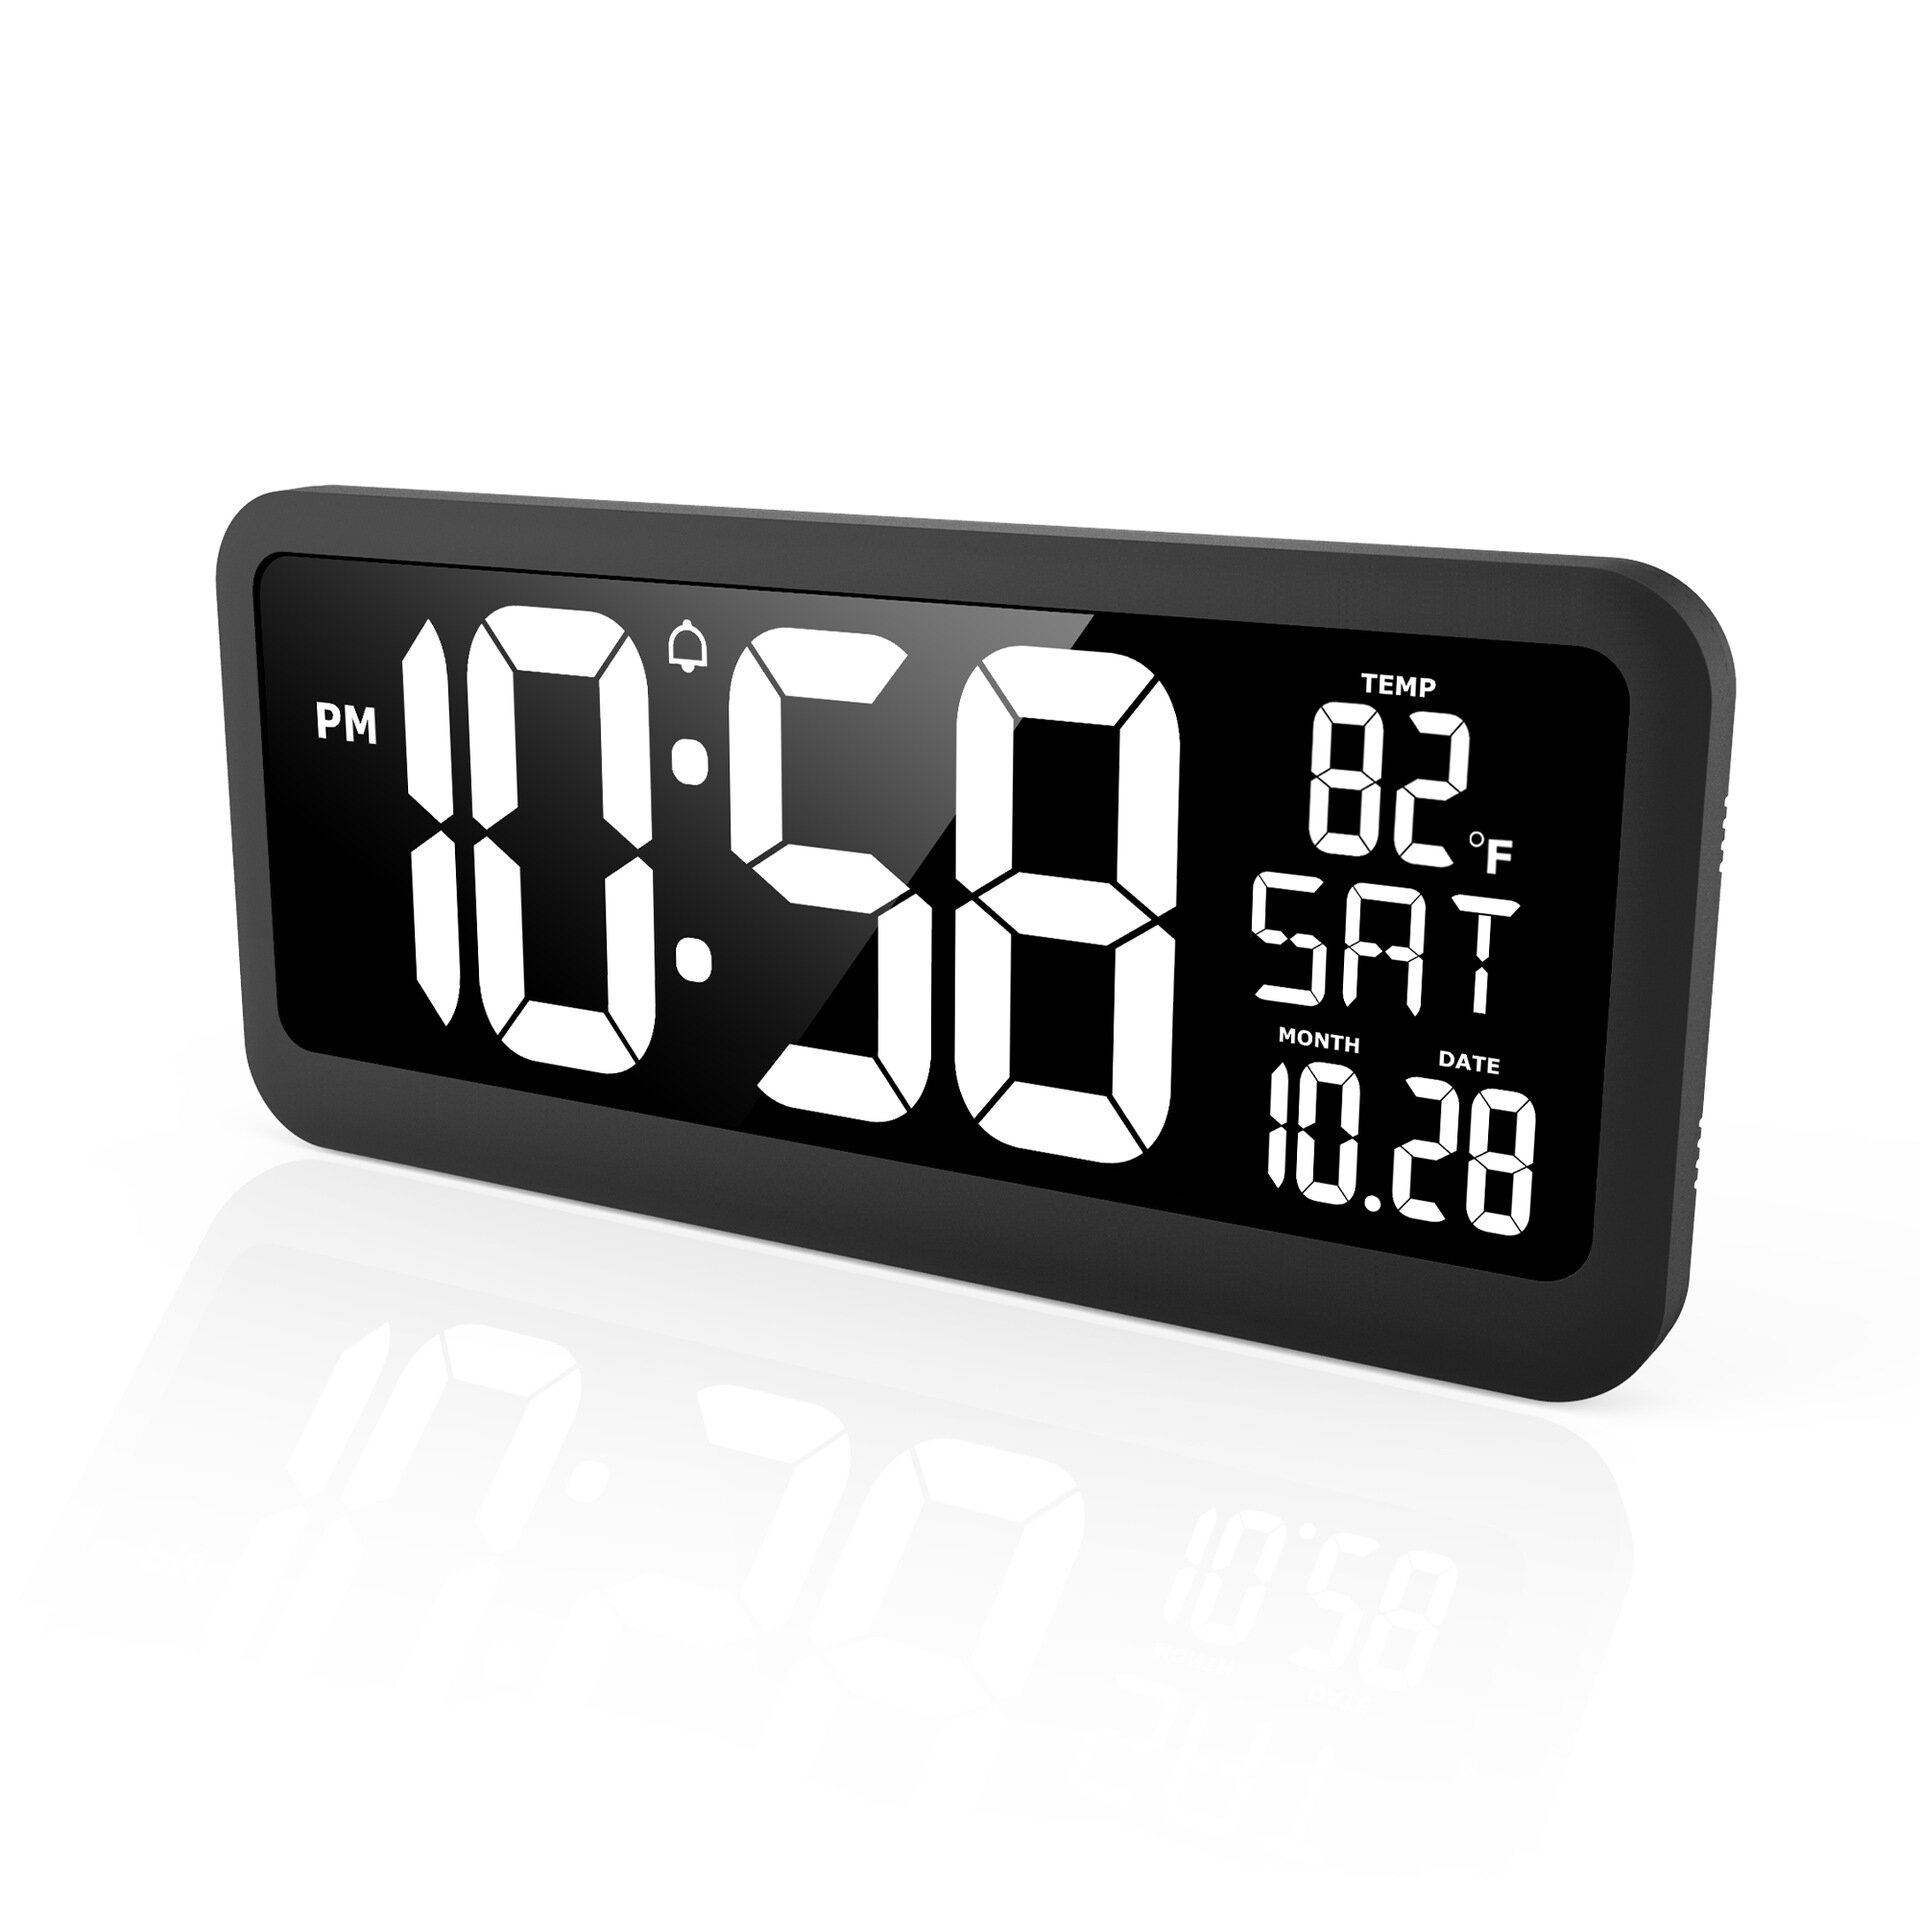 

Ultra-Clear LED Large Screen XXL Wall Clock Living Room Alarm Clock Temperature Clock with Indoor Temperature Display